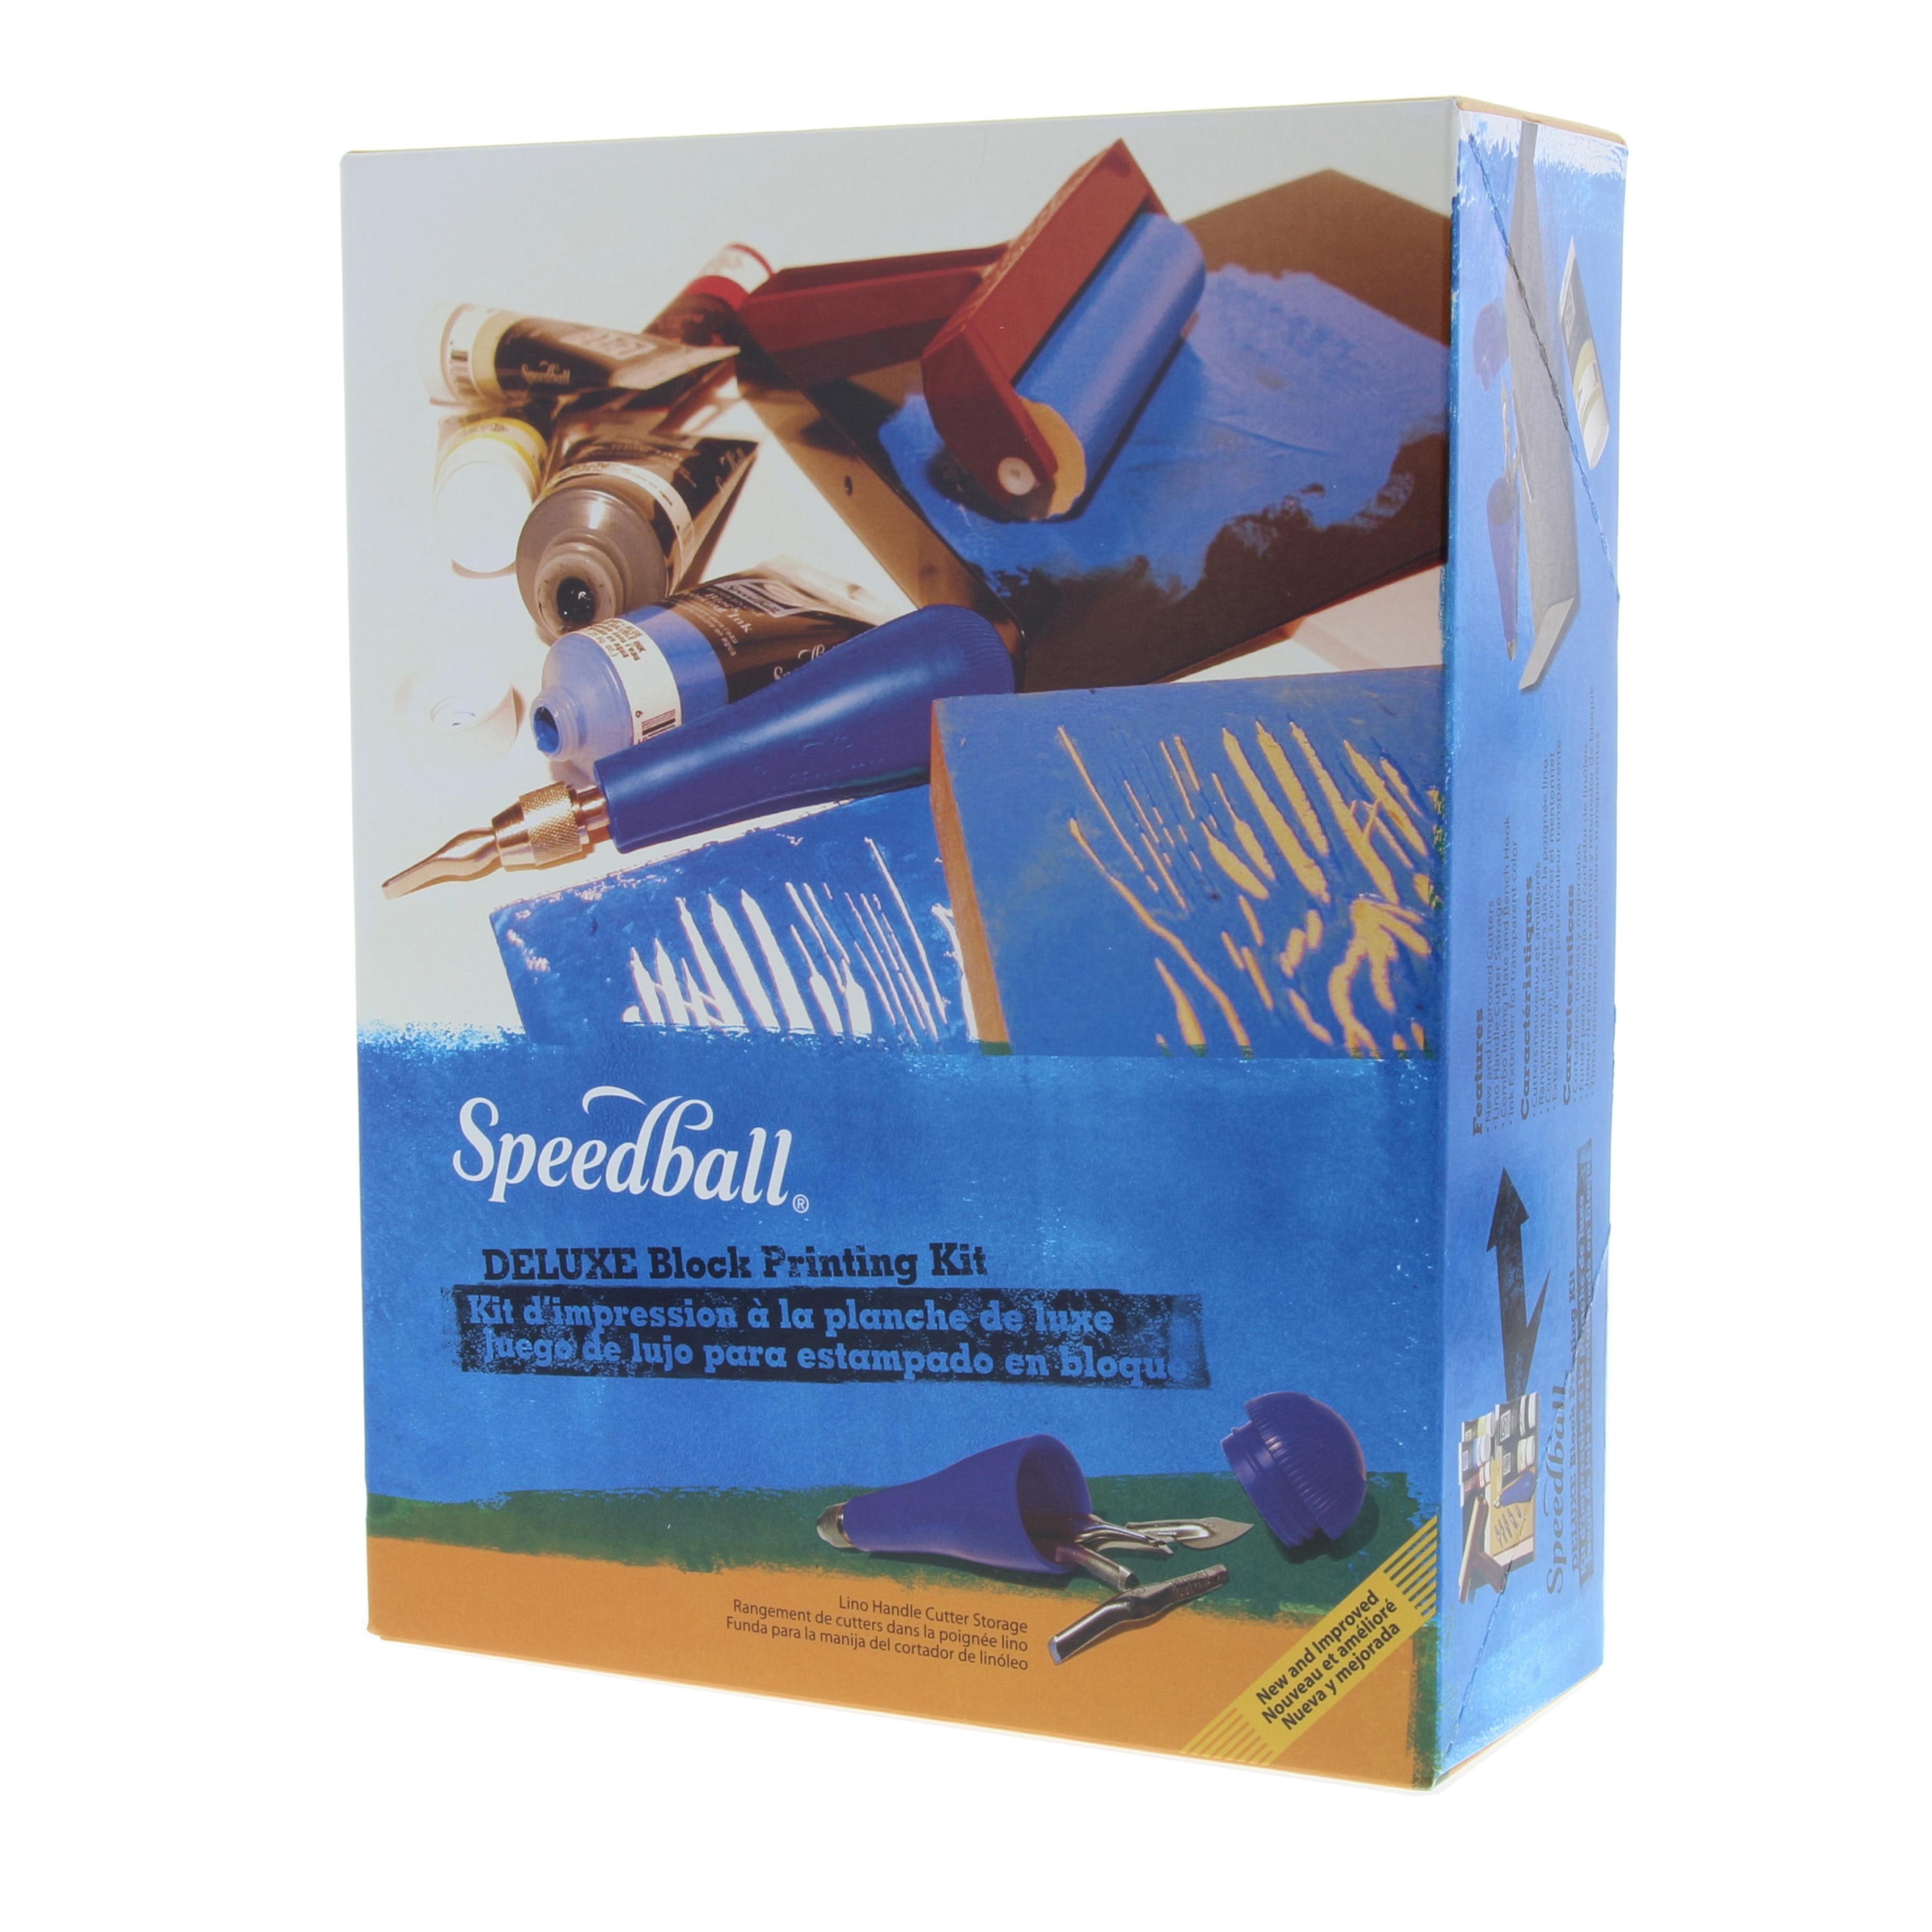 Speedball Deluxe Block Printing Kit, 15 Pieces